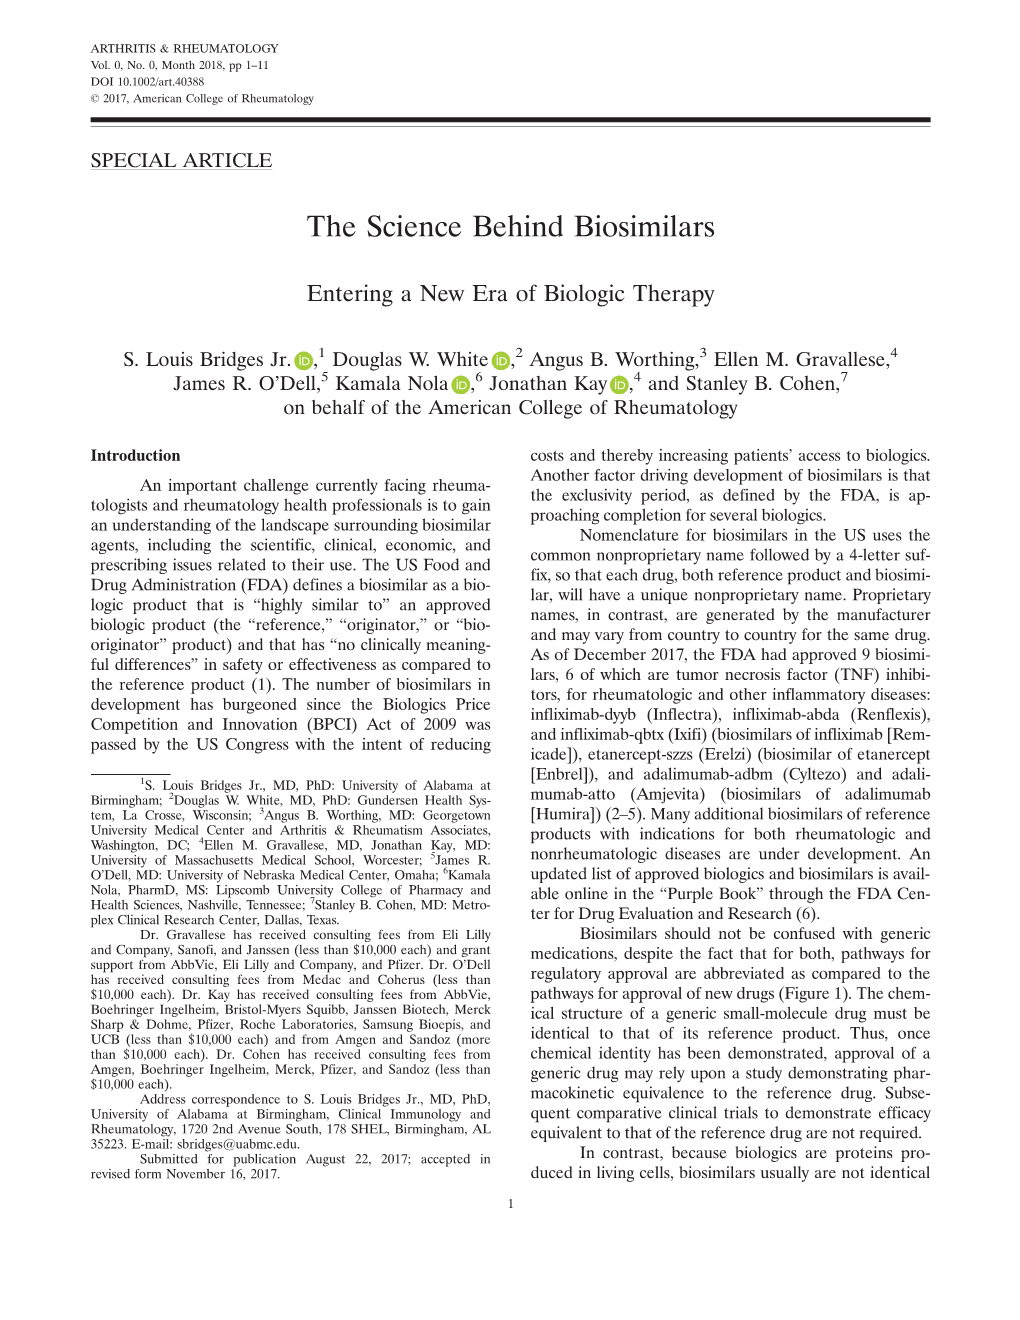 The Science Behind Biosimilars